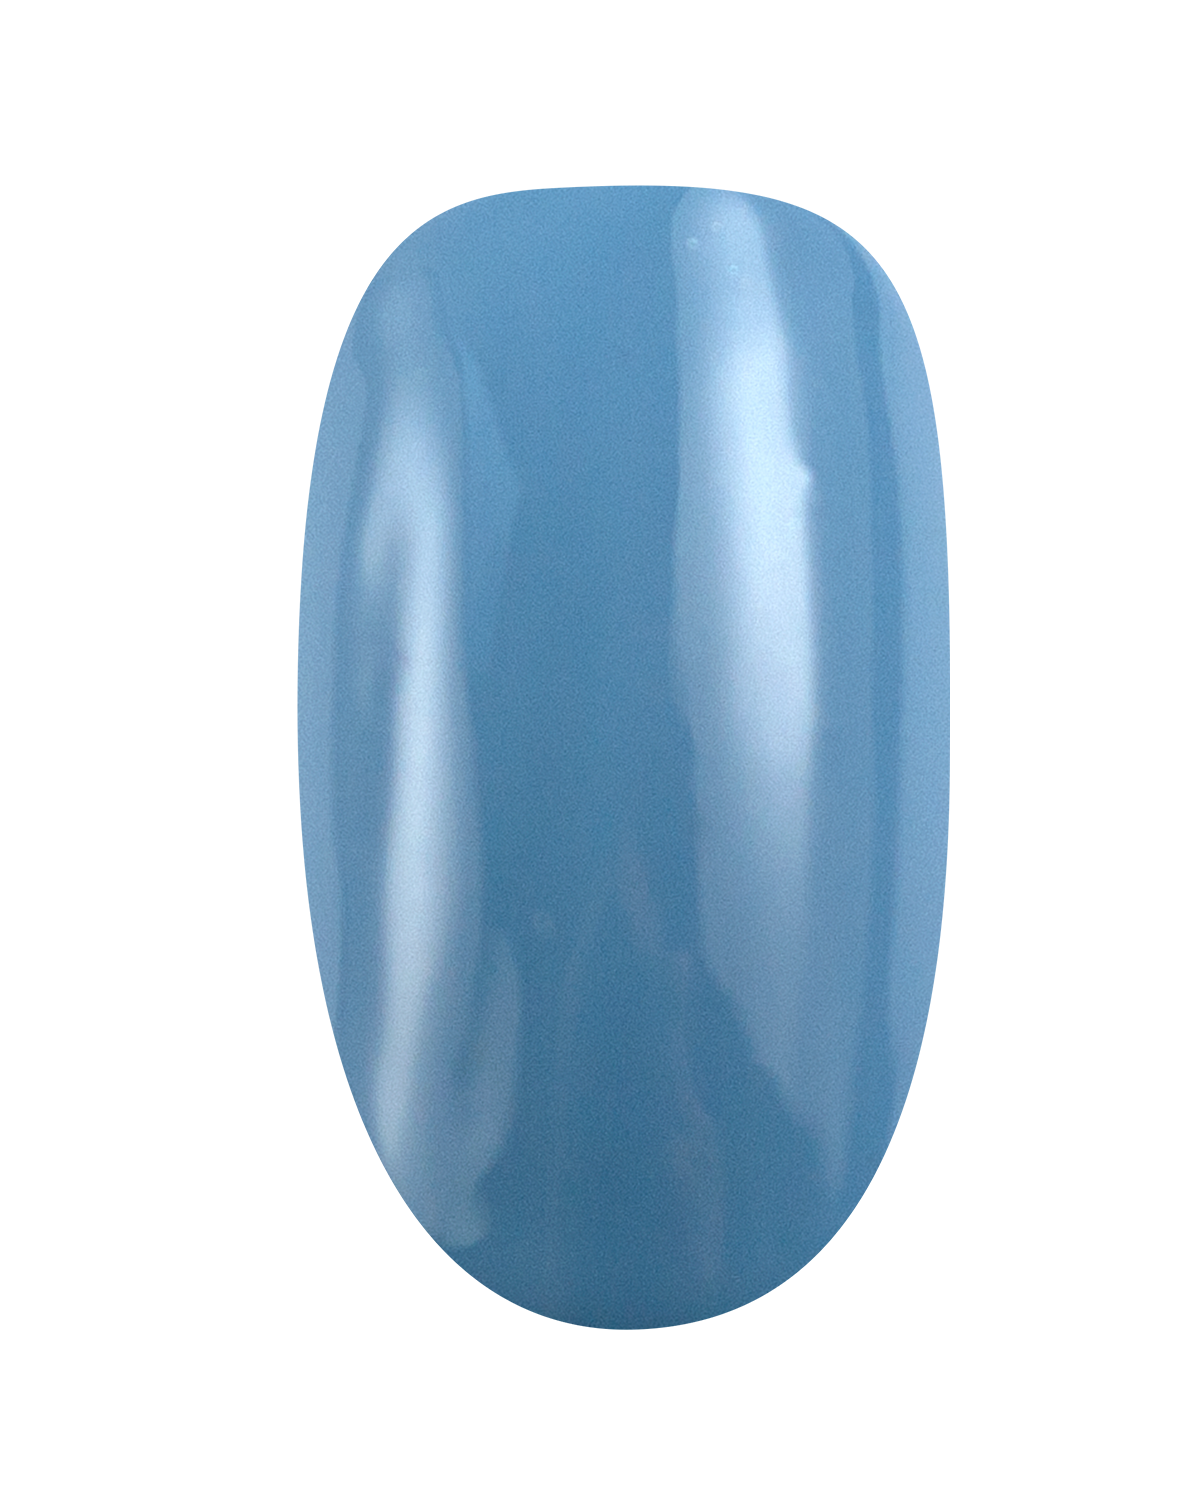 E.MiLac LM Blue Ray #232, 9 ml.